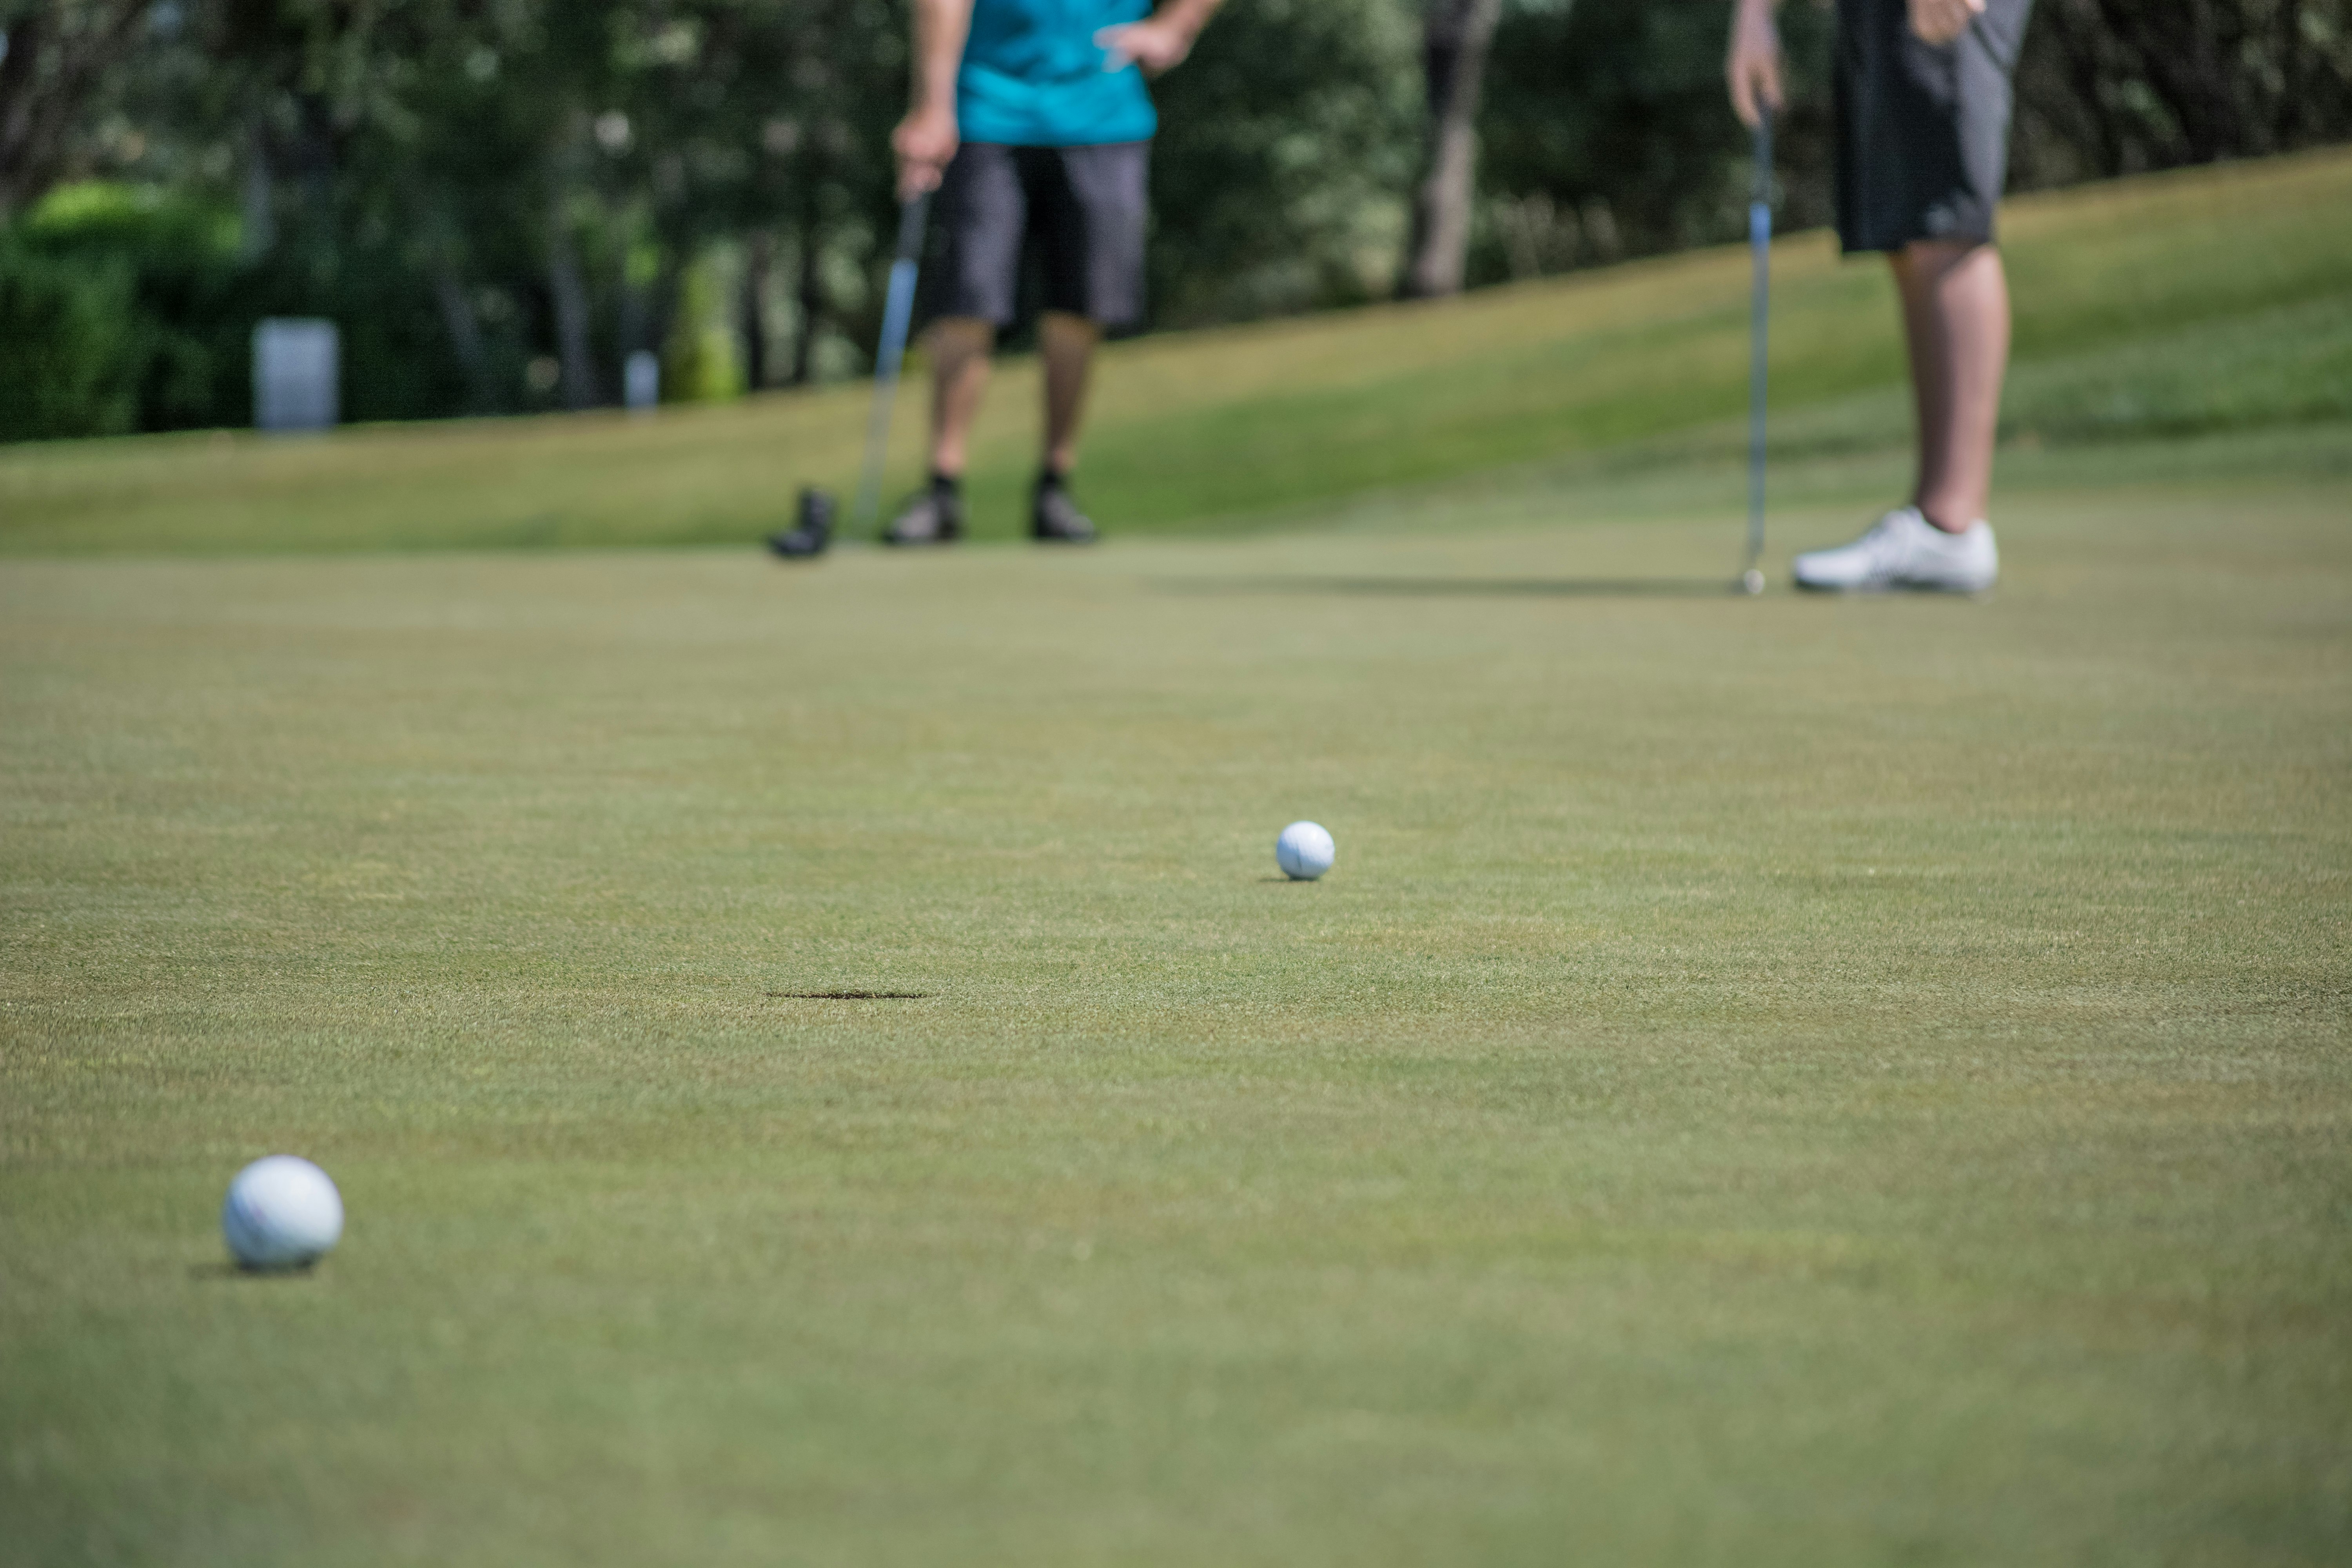 shallow focus photography of golf balls